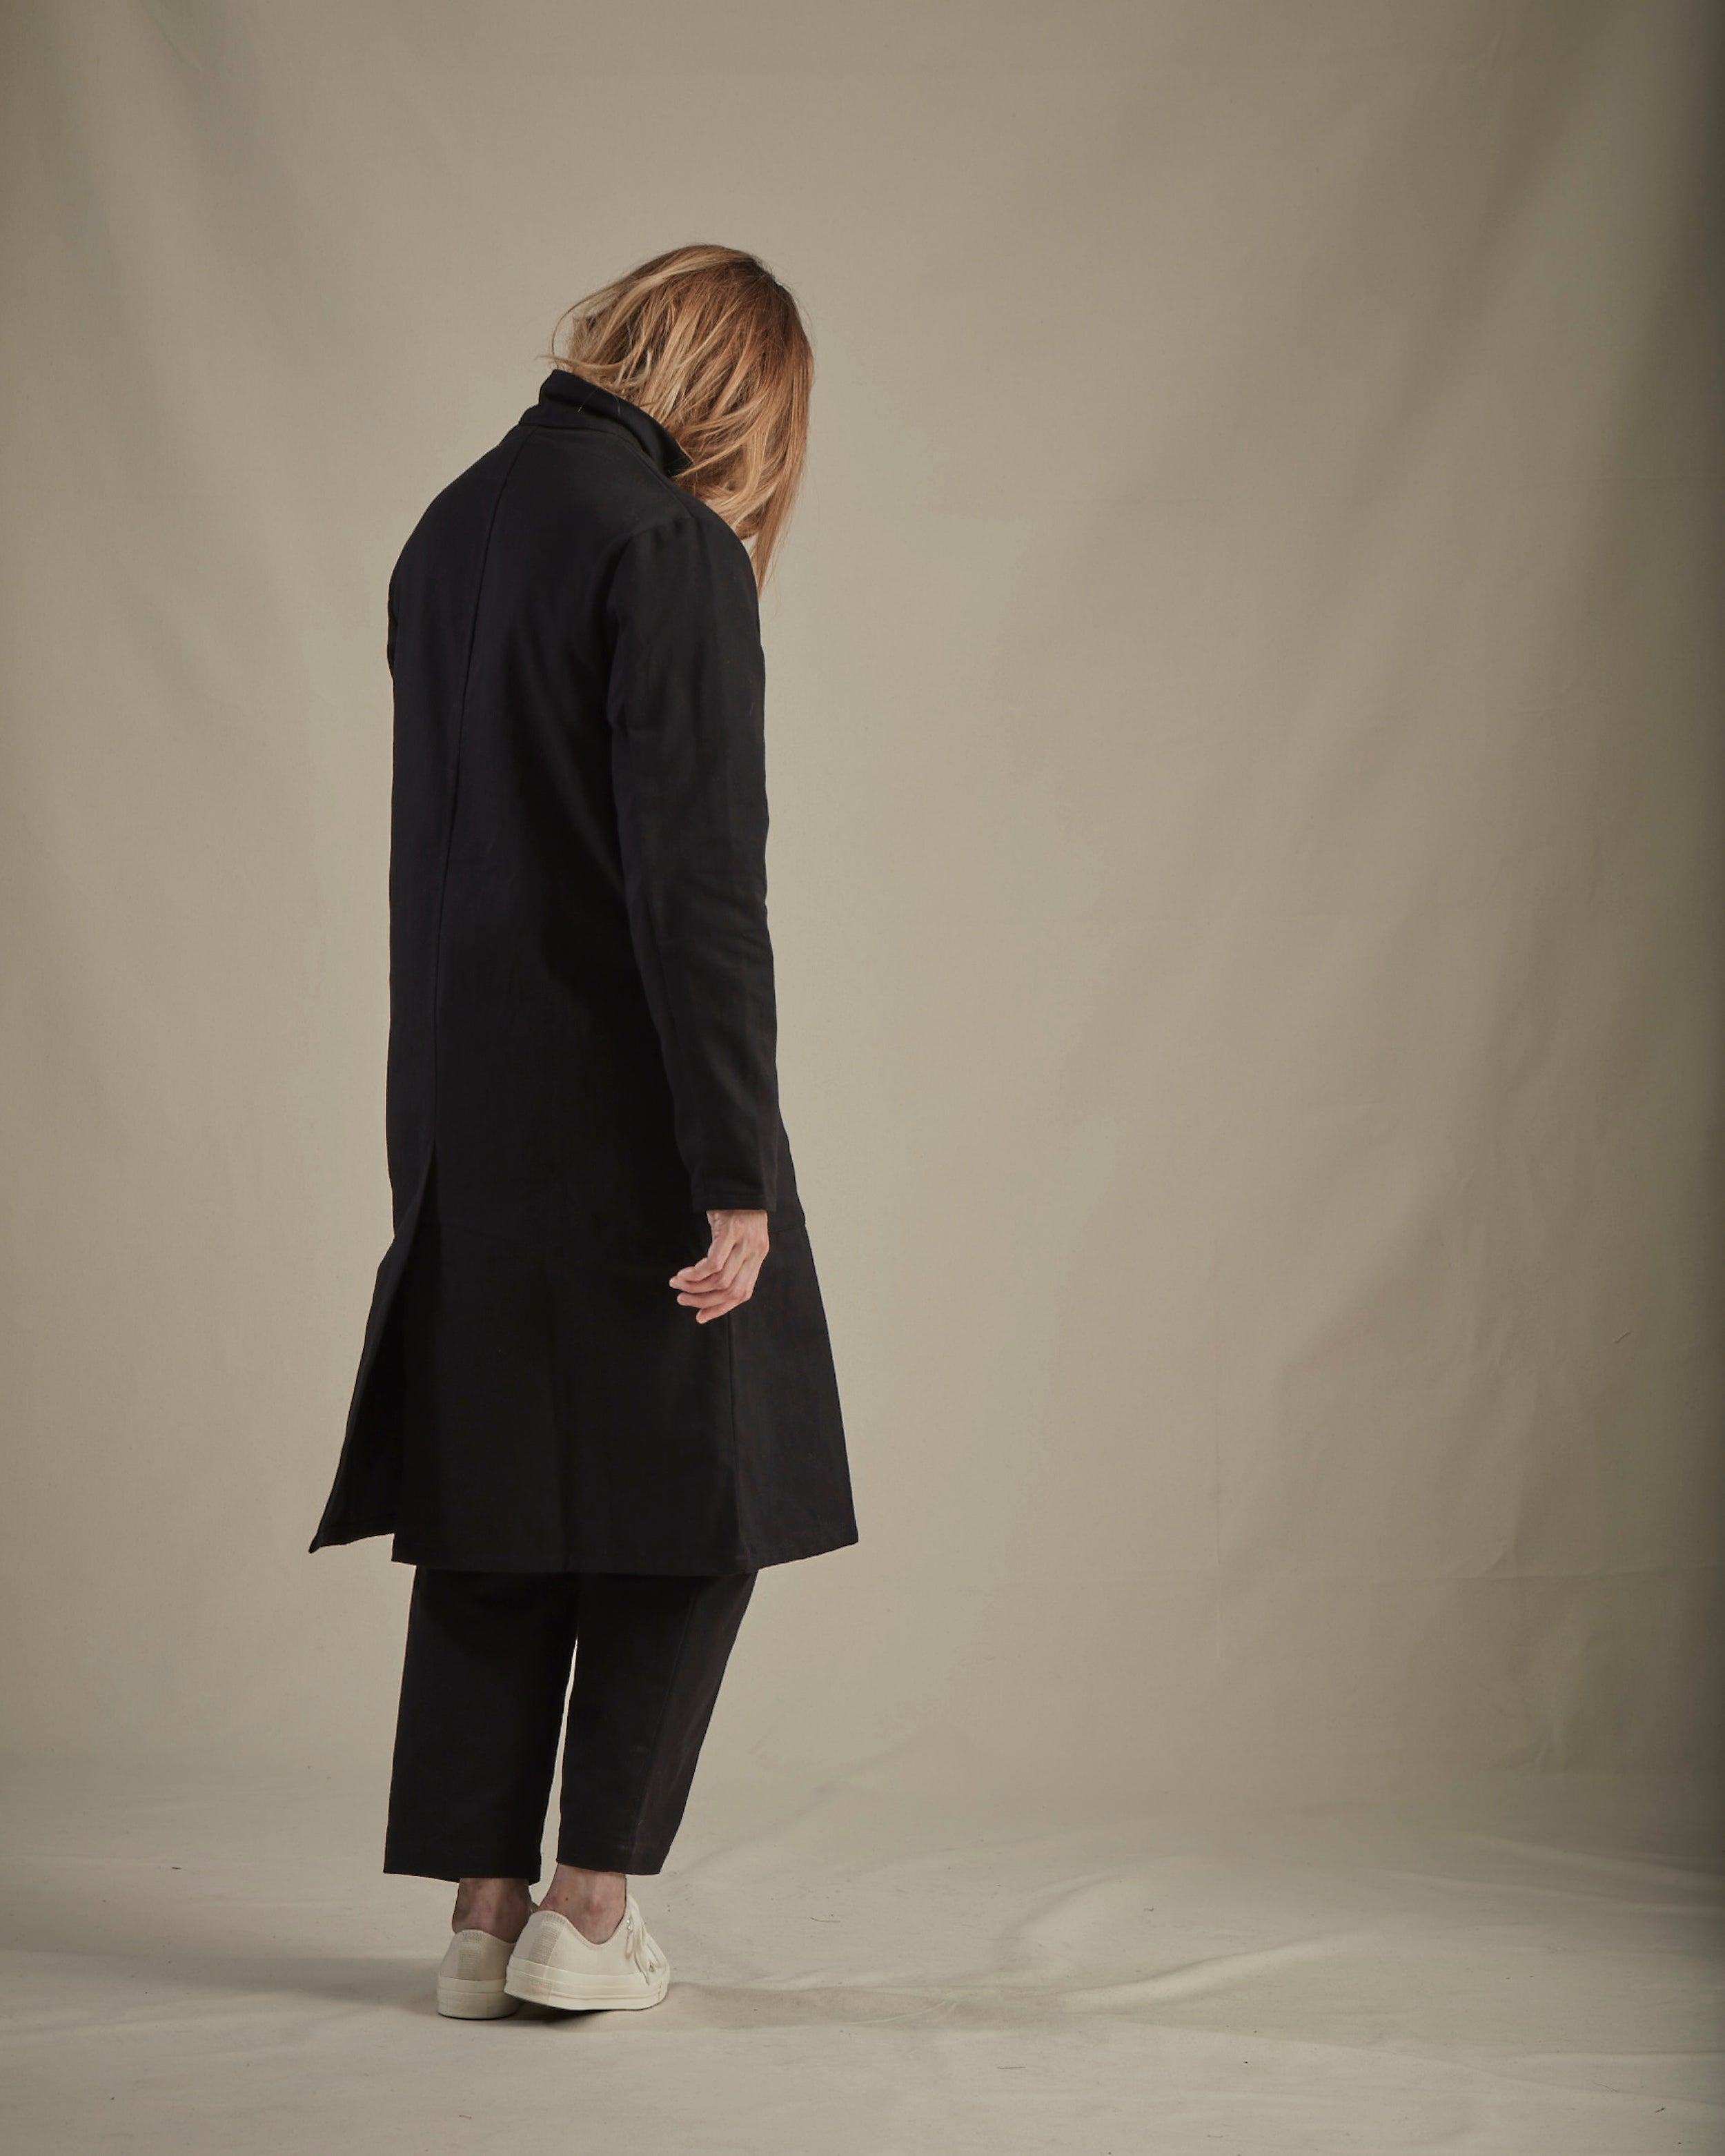 Sienna wears Stockman's Coat in Black Drill